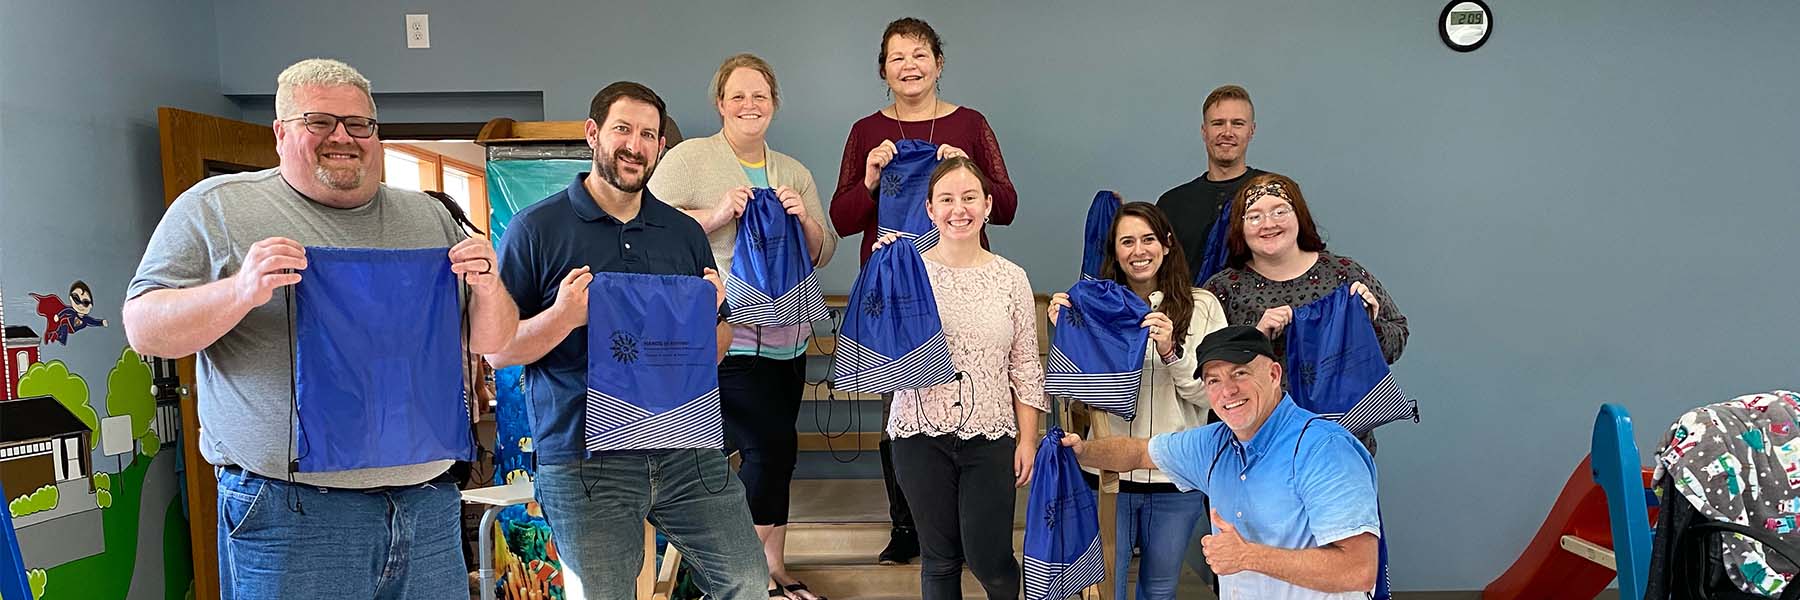 Members of the community and Kappa, Kappa, Kappa, inc holding blue string bags